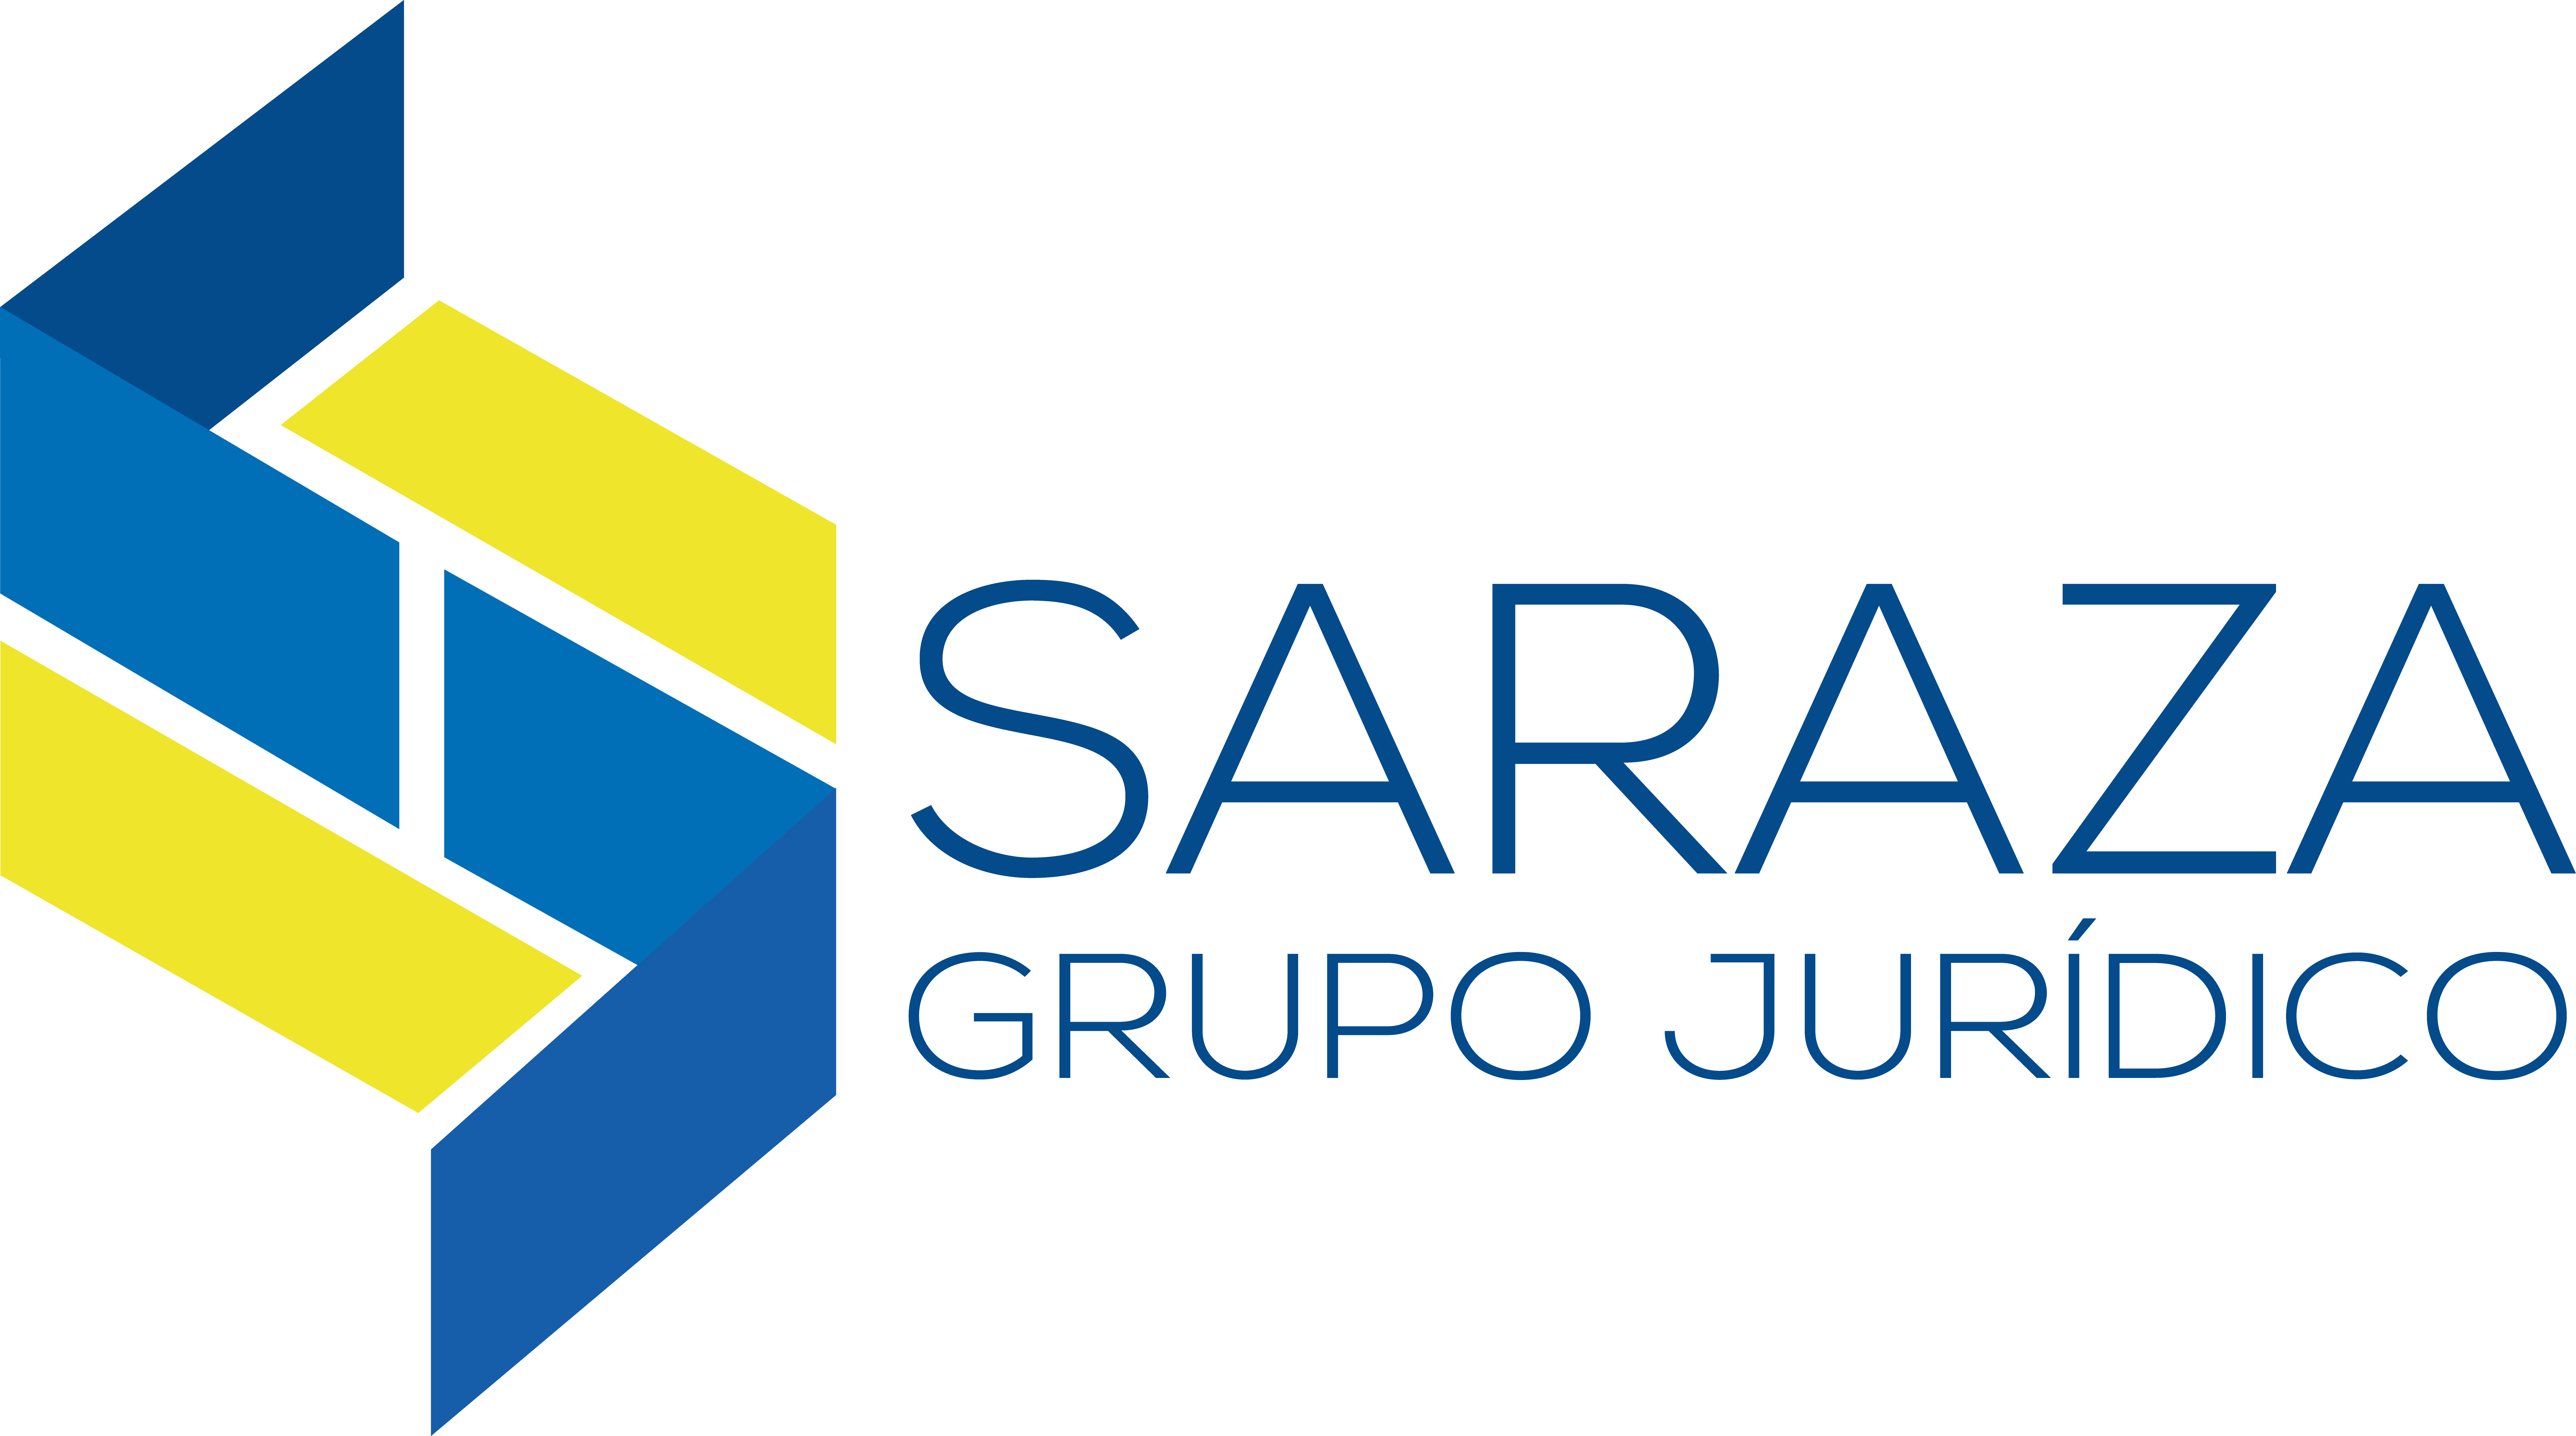 Grupo Jurídico Saraza S.A.S